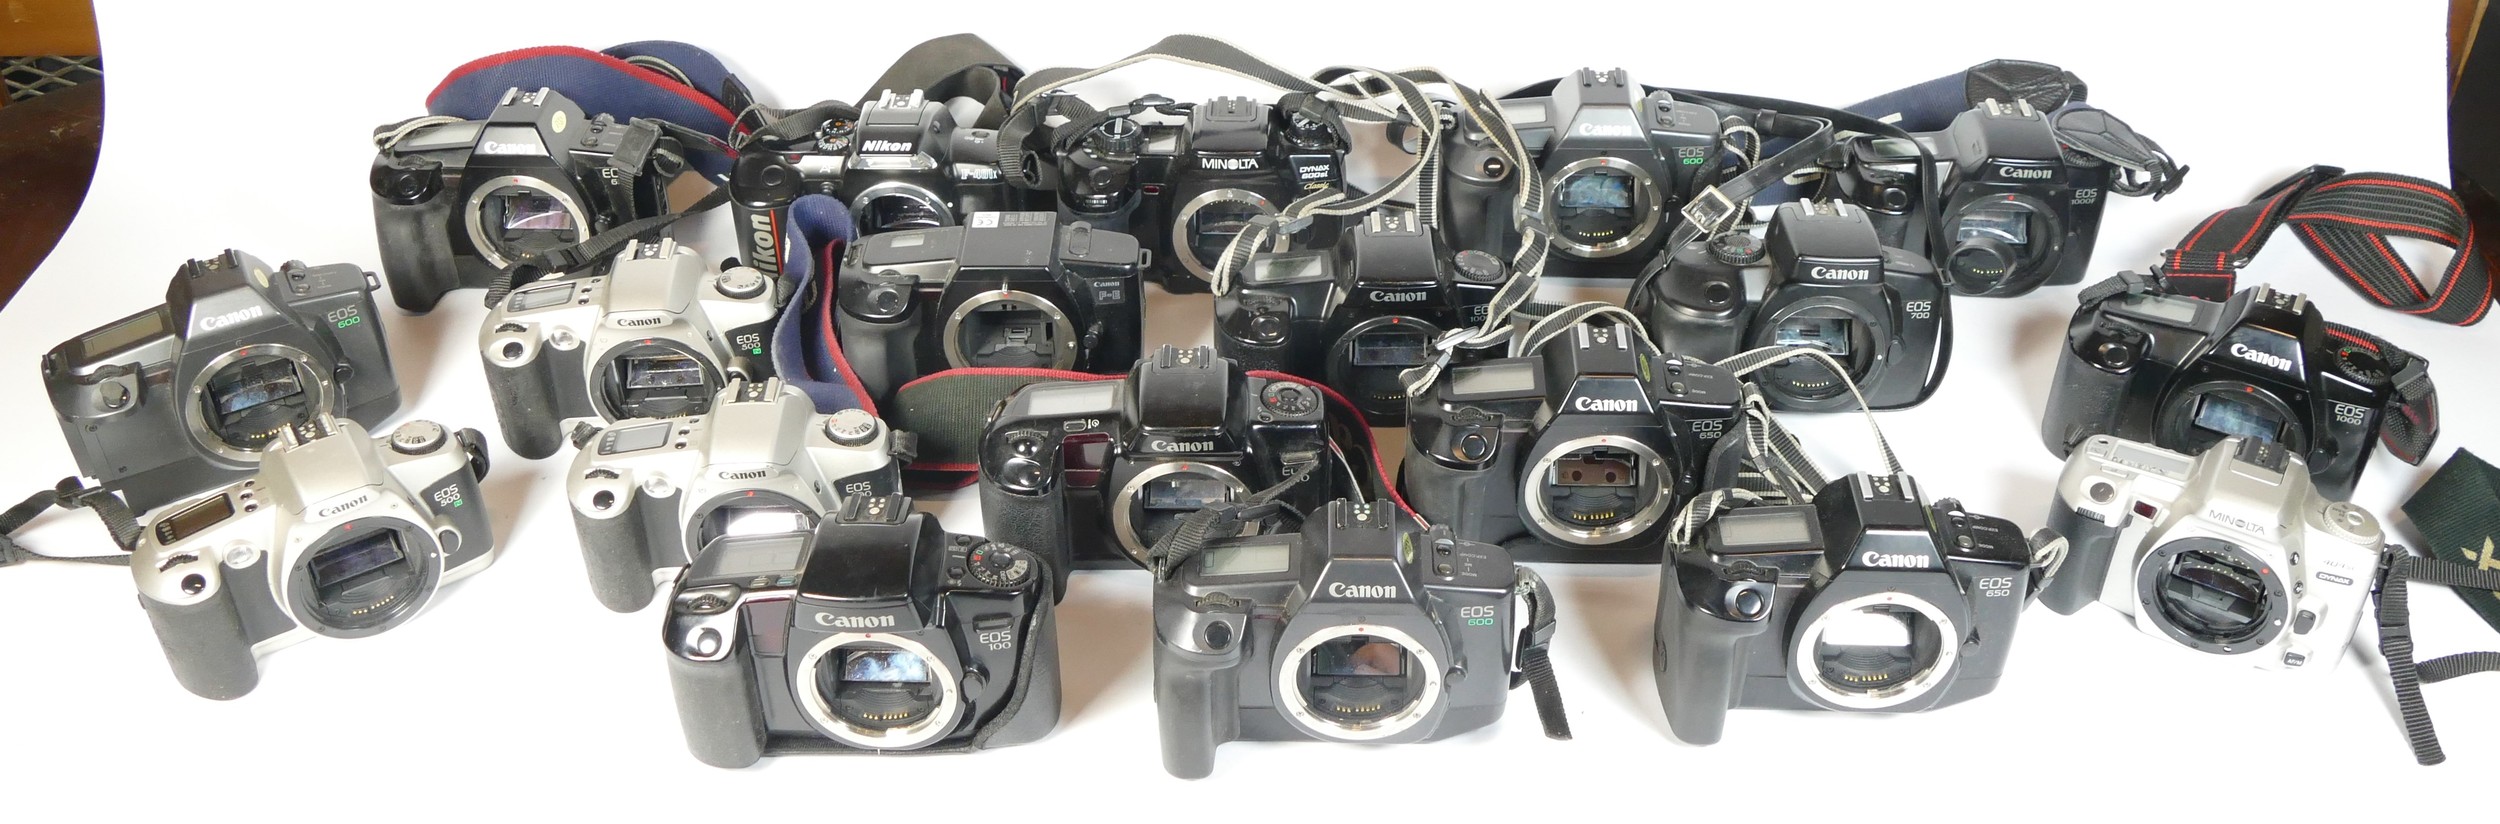 Twenty four SLR vintage film cameras to include a Canon EOS 500N, a Canon EOS 700, a Nikon F-401x